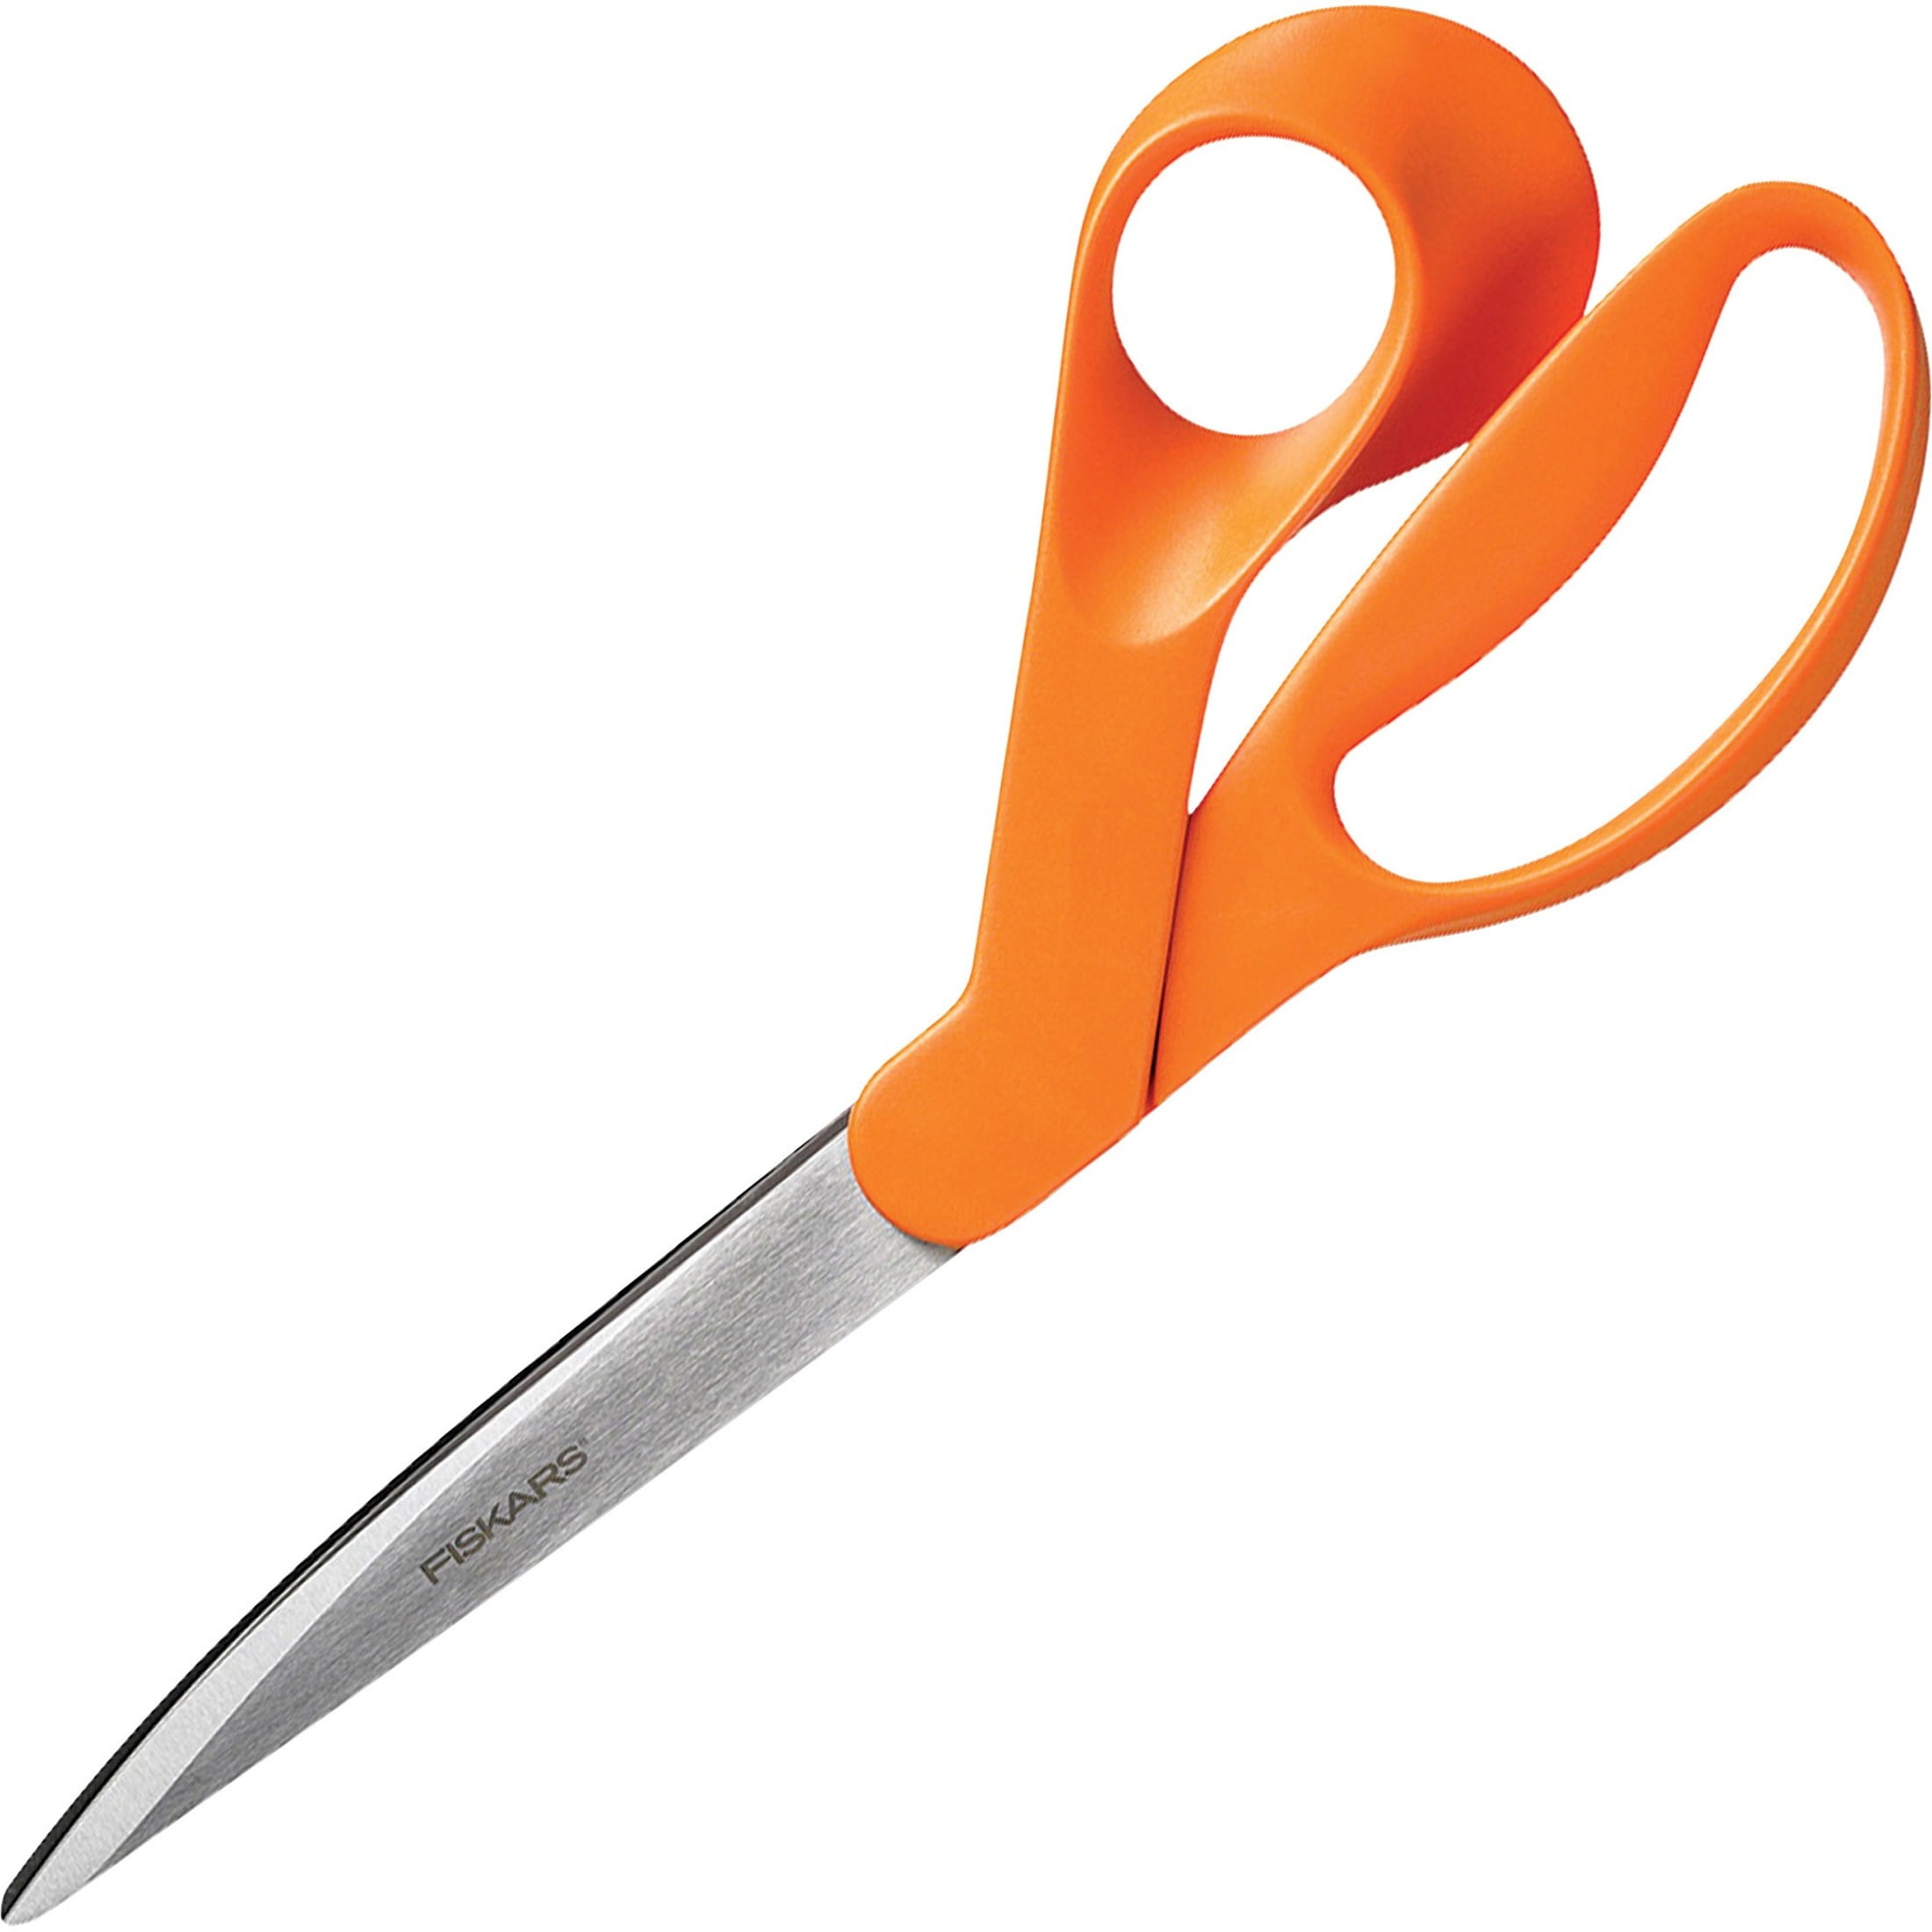 Fiskars RazorEdge Fabric Scissors - 9 Heavy Duty Fabric Shears with  Ergonomic Handle - Orange